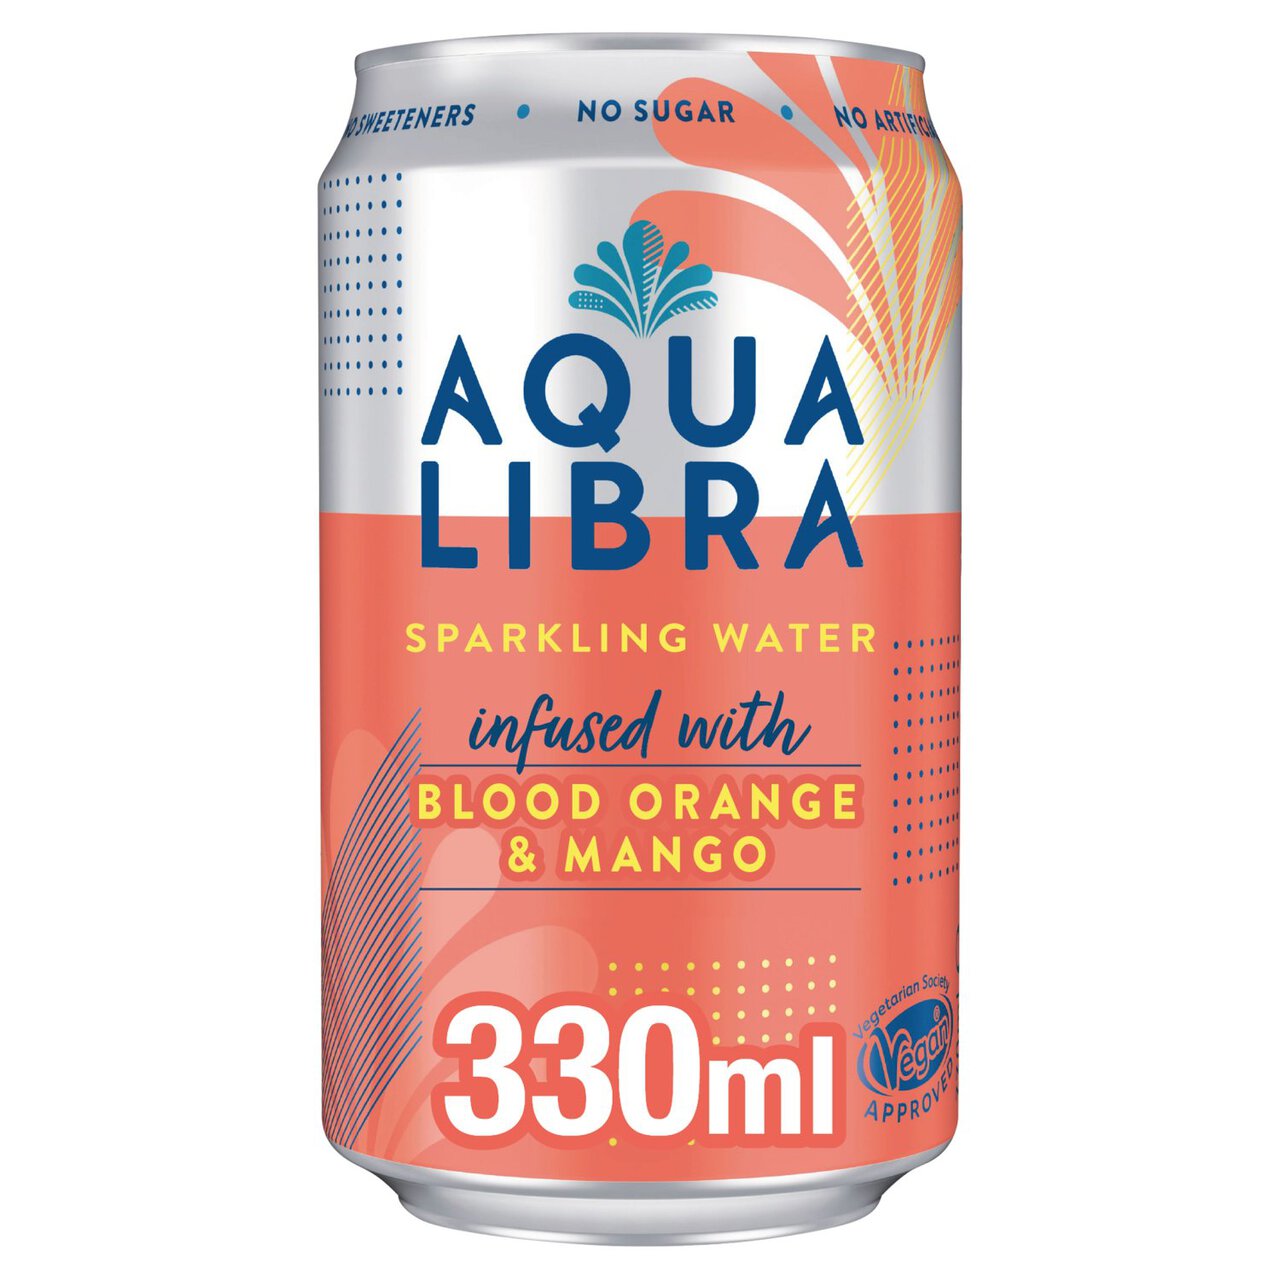 Aqua Libra Blood Orange & Mango Infused Sparkling Water 330ml